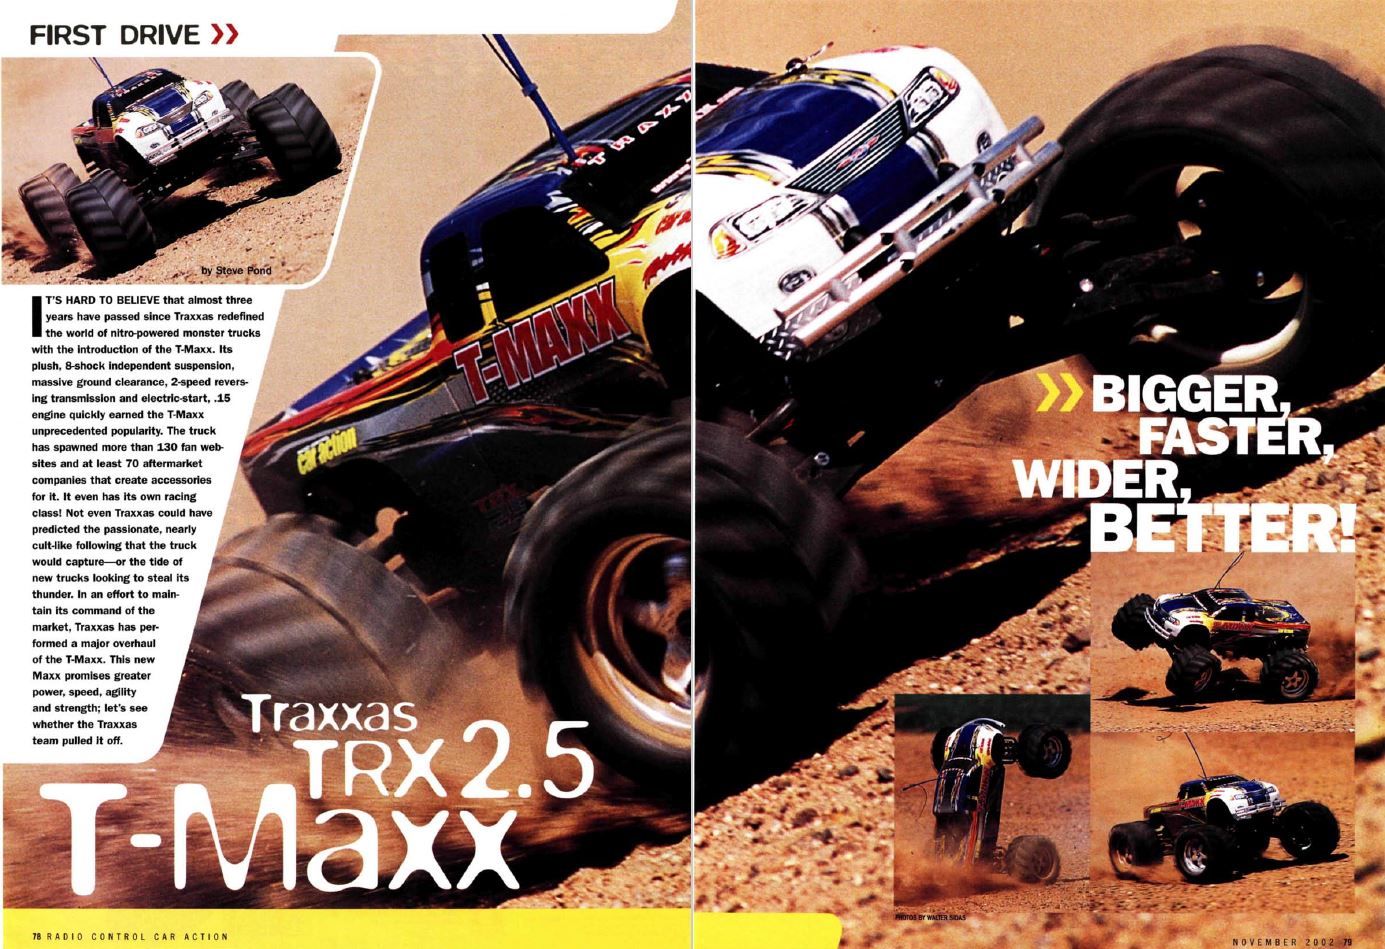 RC Car Action - RC Cars & Trucks | #TBT The “New” Traxxas TRX 2.5 T-Maxx